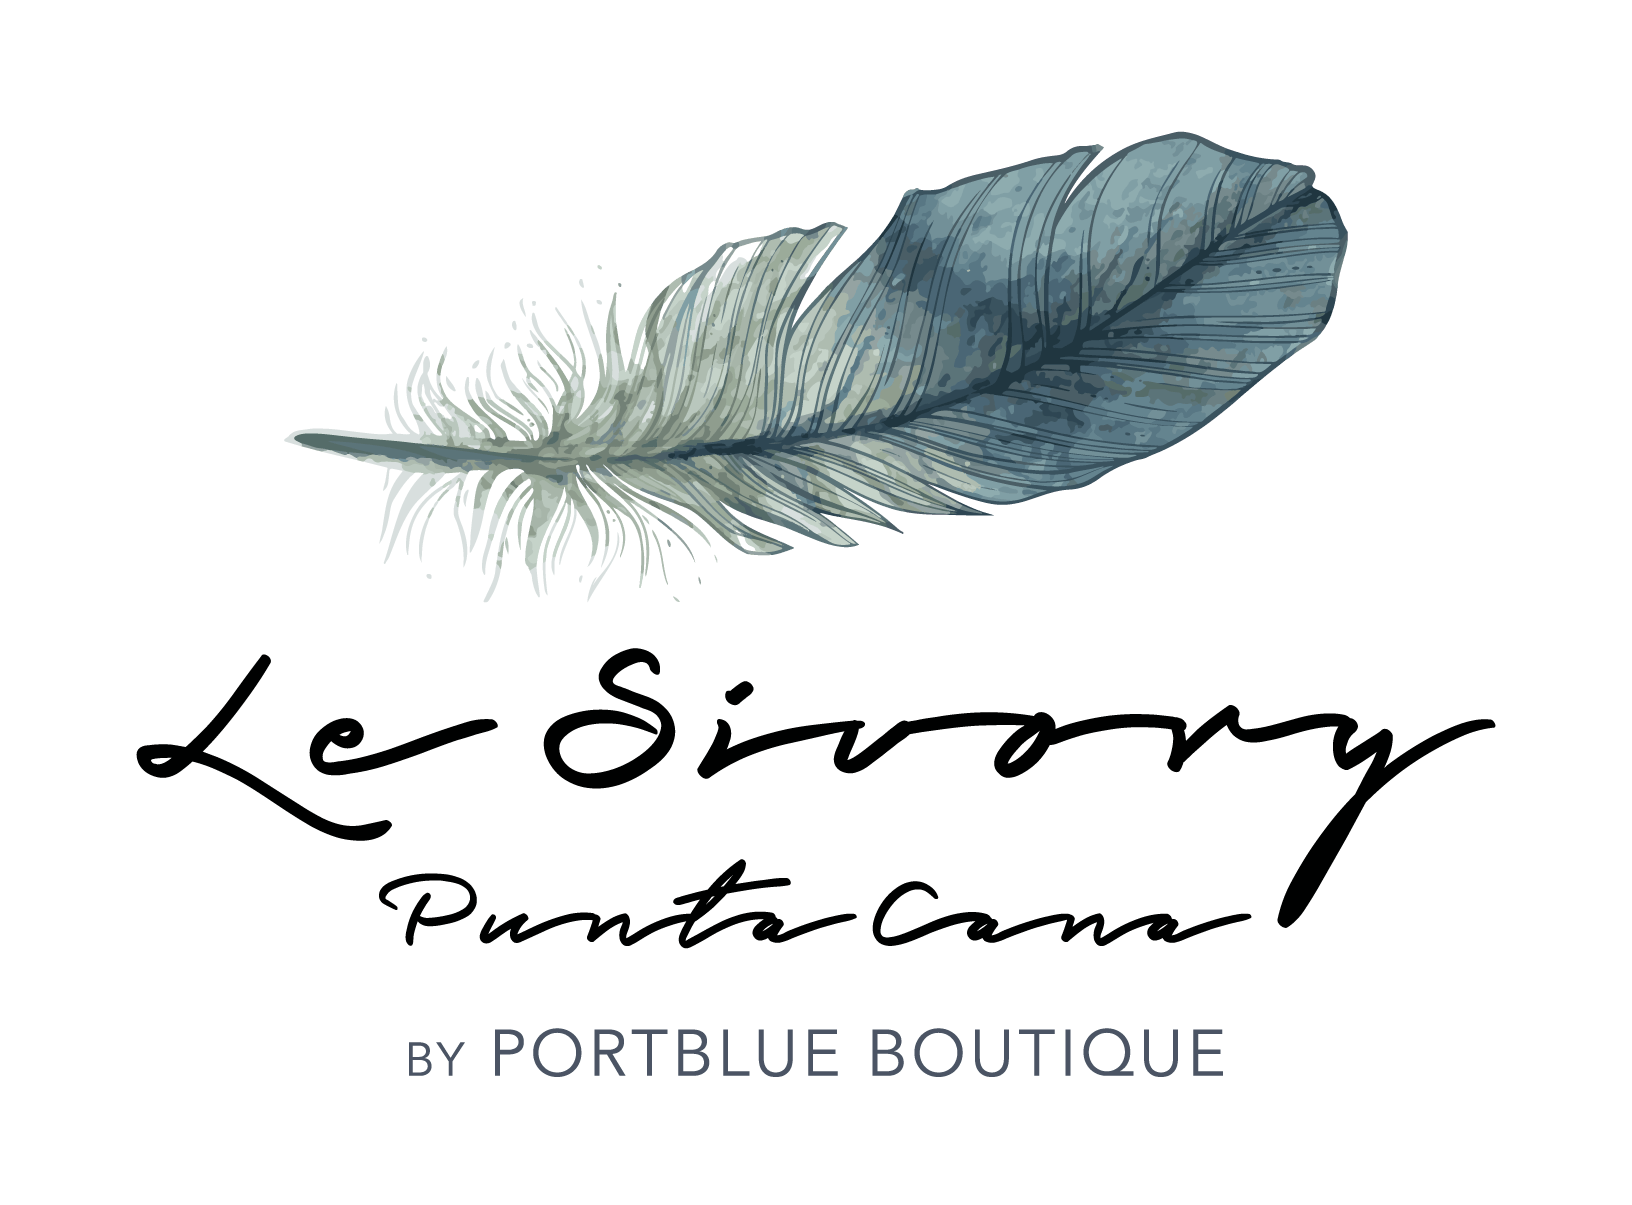 Le Sivory Punta Cana by PortBlue Boutique